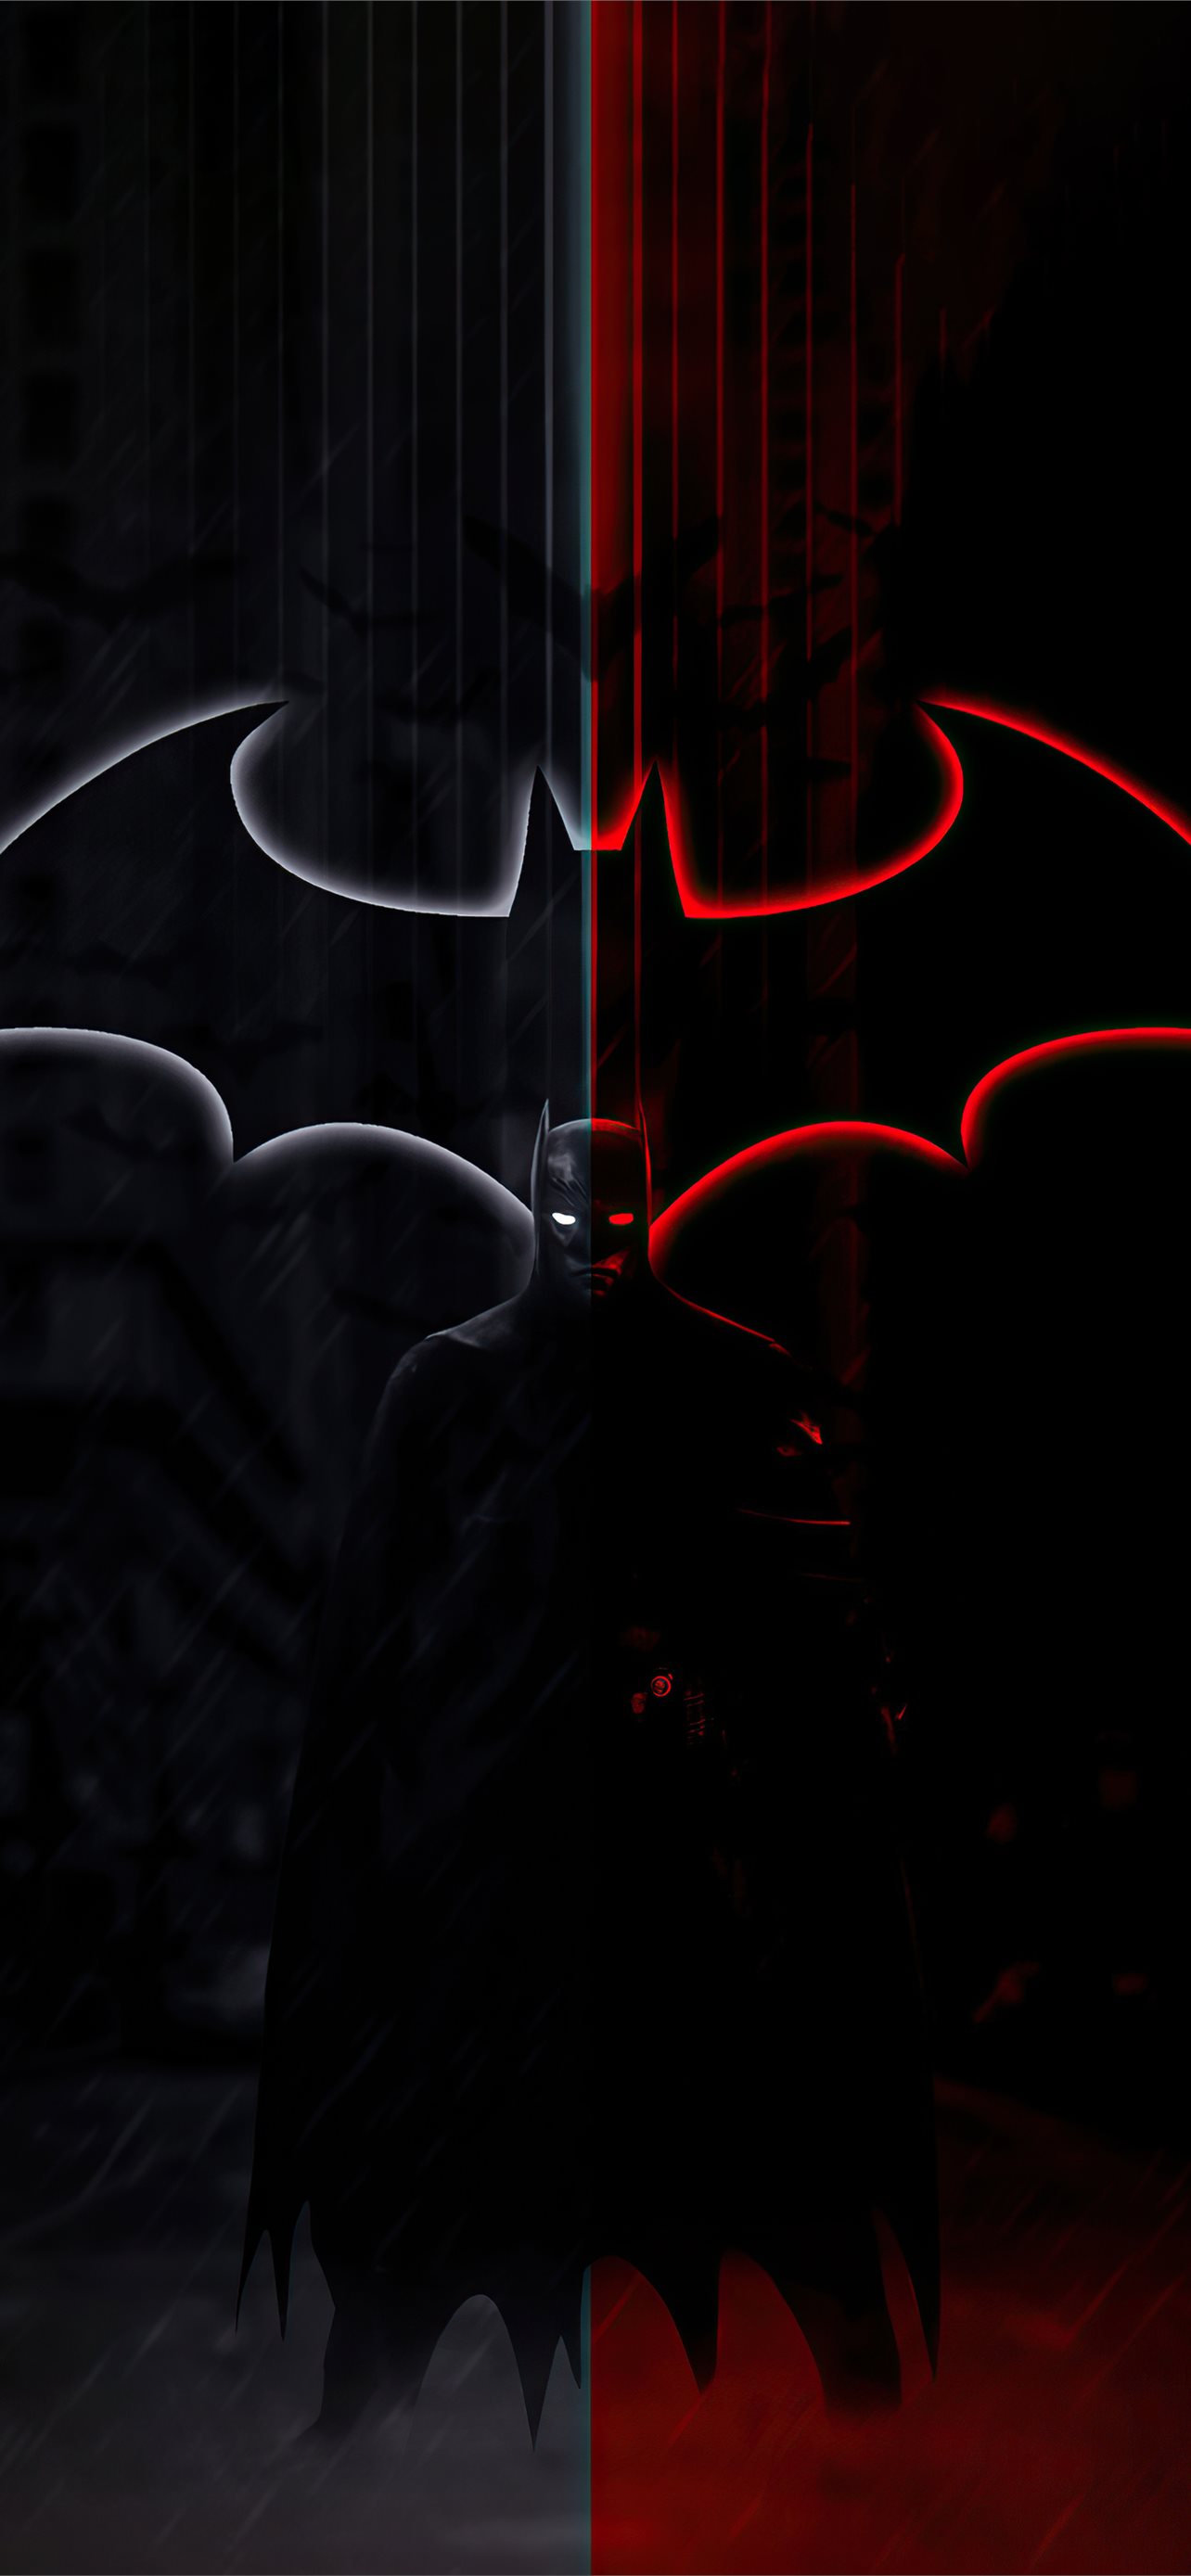 iPhoneXpapers - aa91-wallpaper-batman-scary-illust